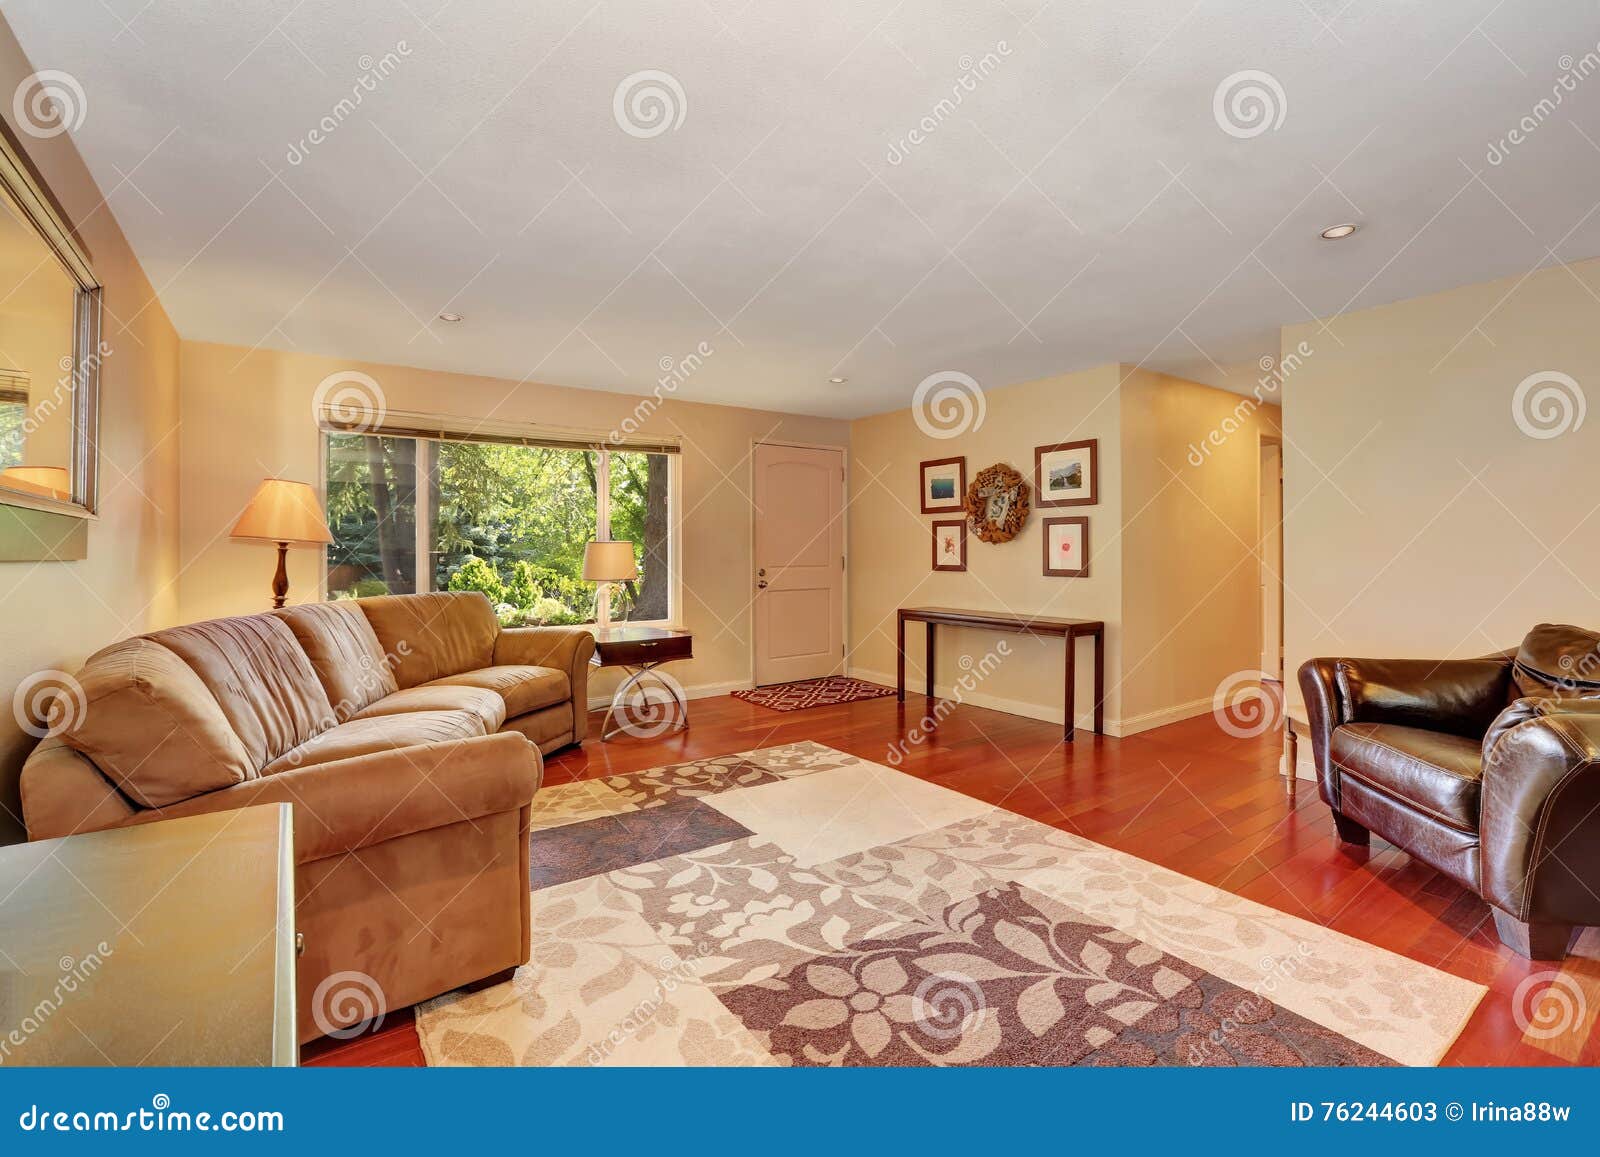 Cozy Spacious Living Room with Cherry Wood Floor. Stock Image ...